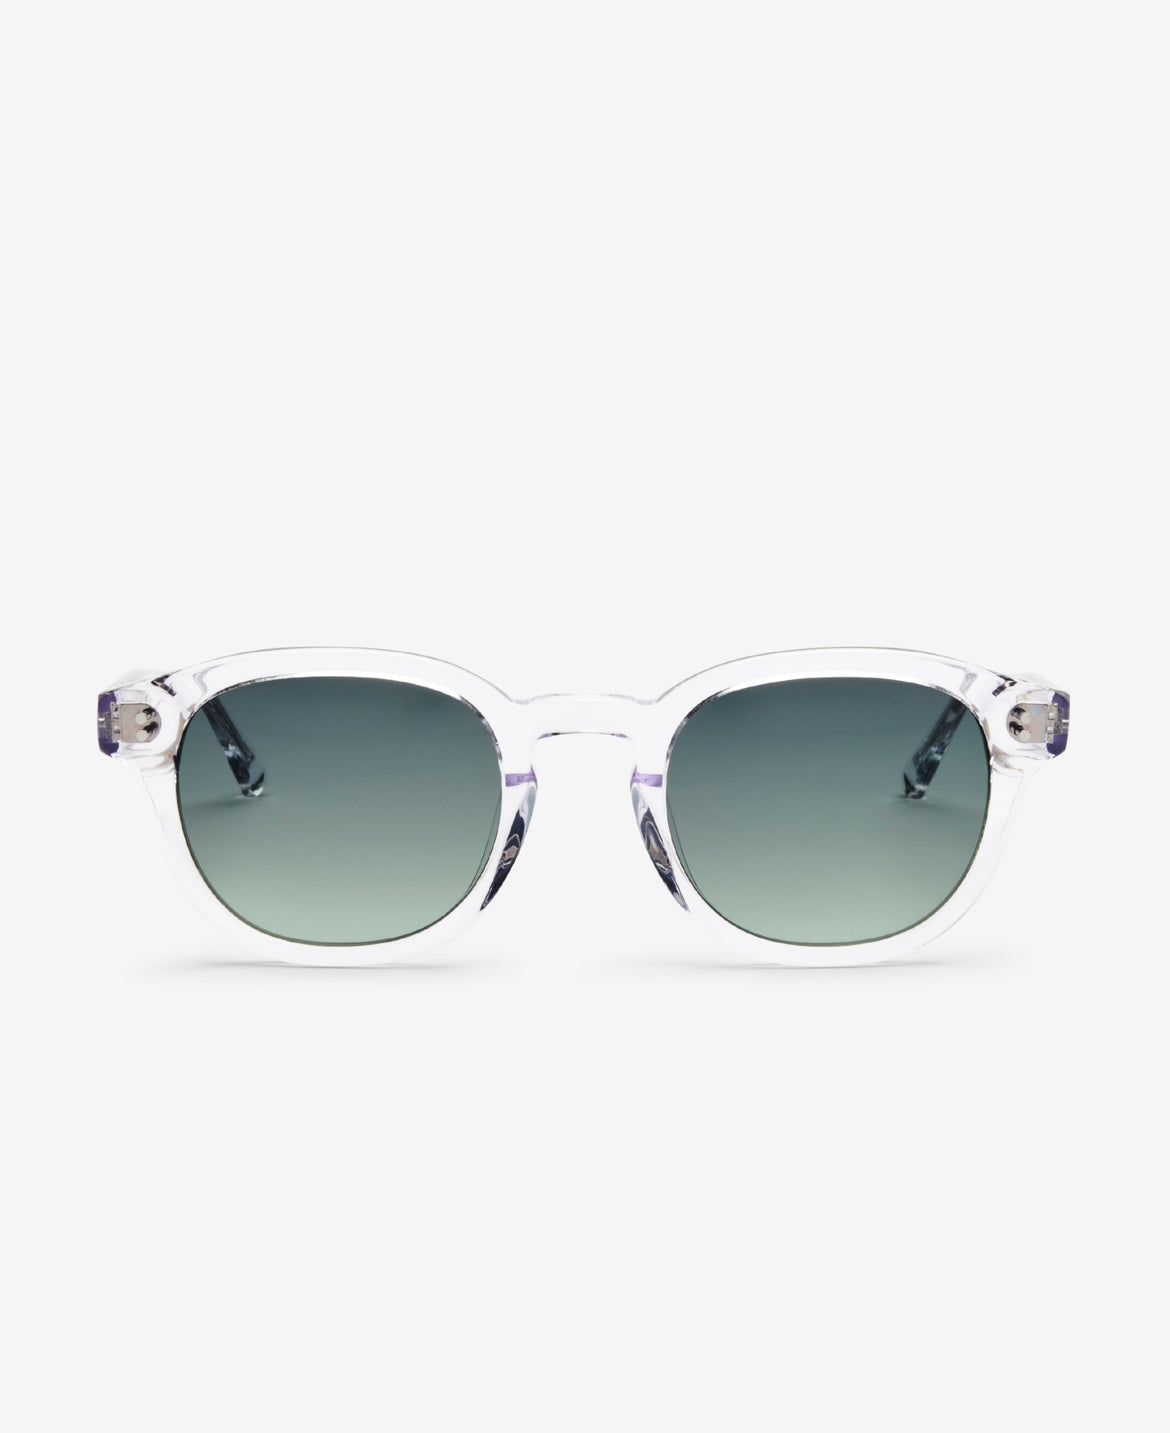 Bille Crystal Green Sunglasses